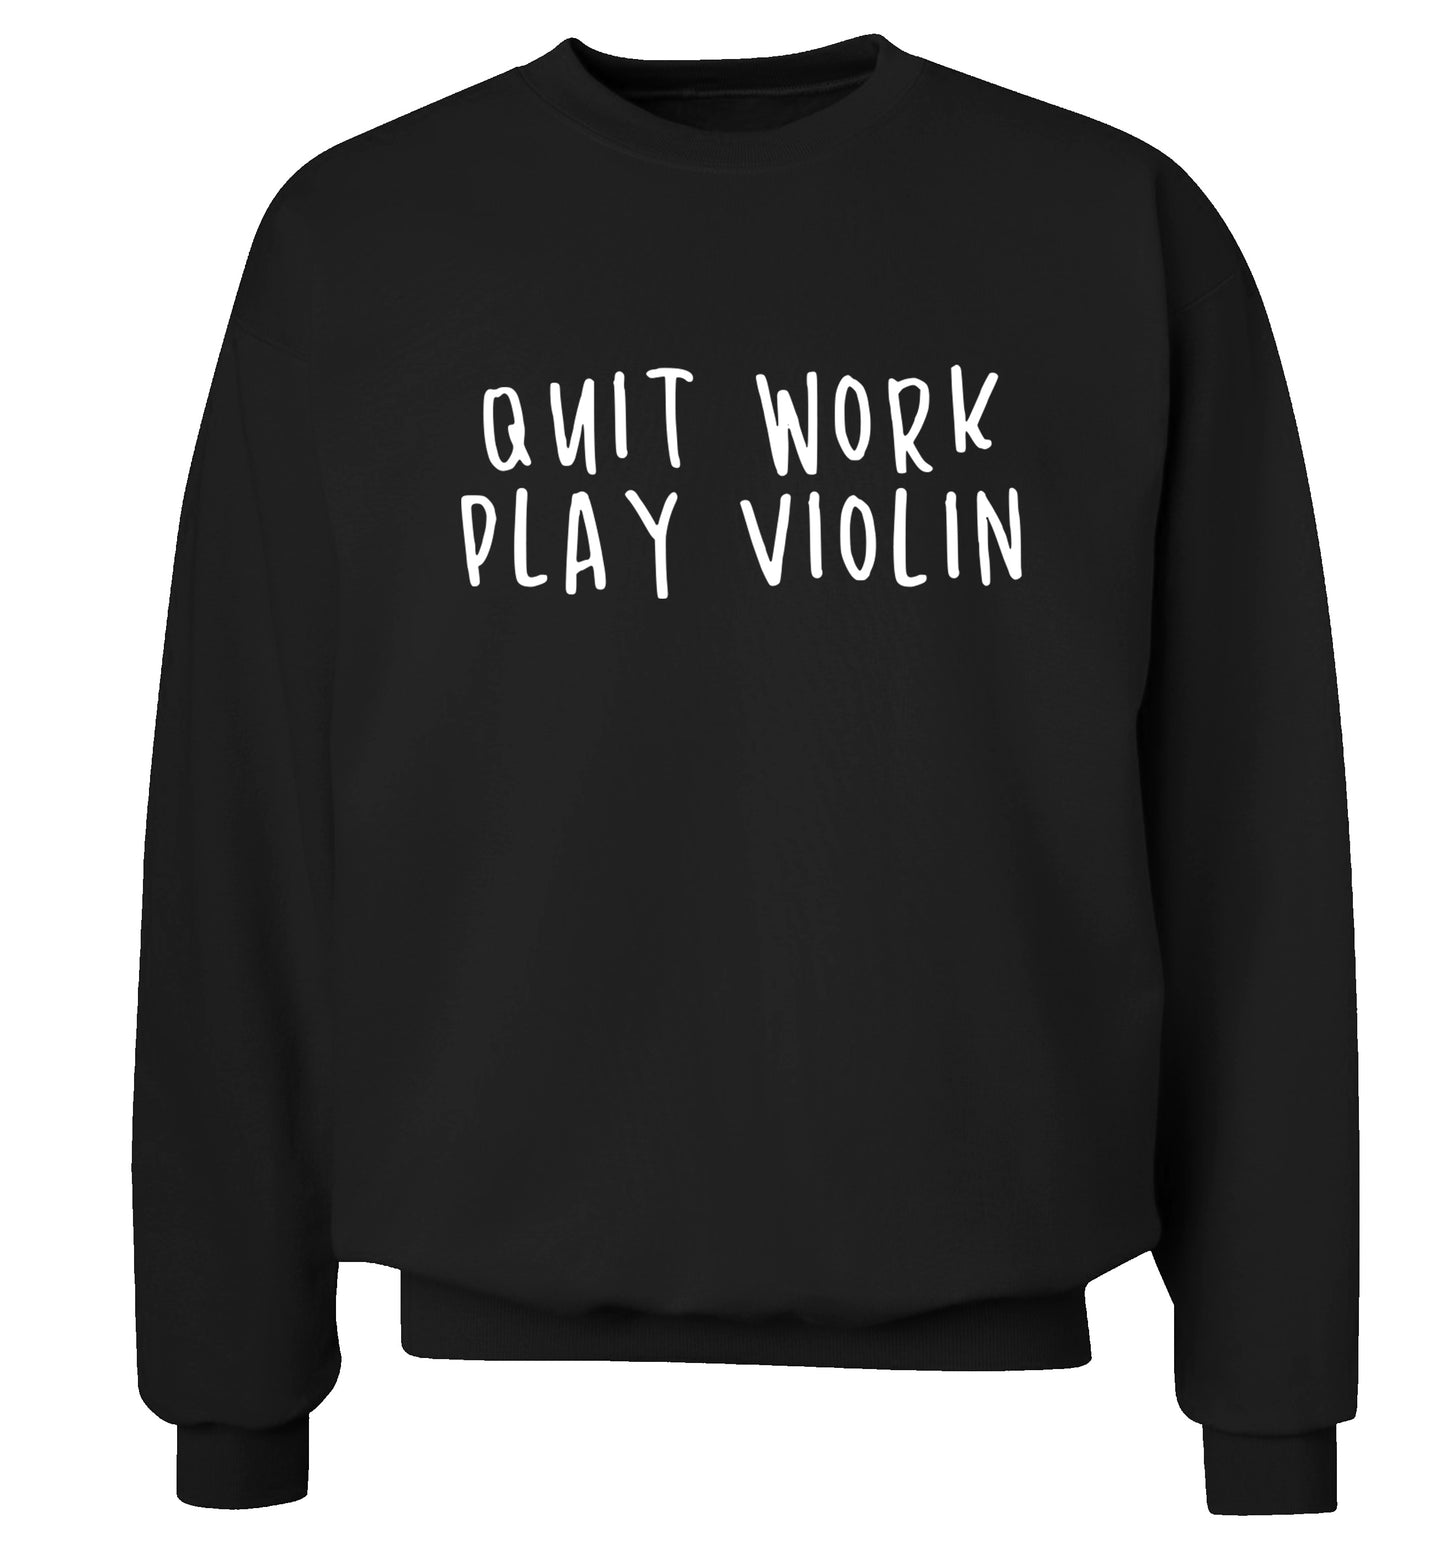 Quit work play violin Adult's unisex black Sweater 2XL